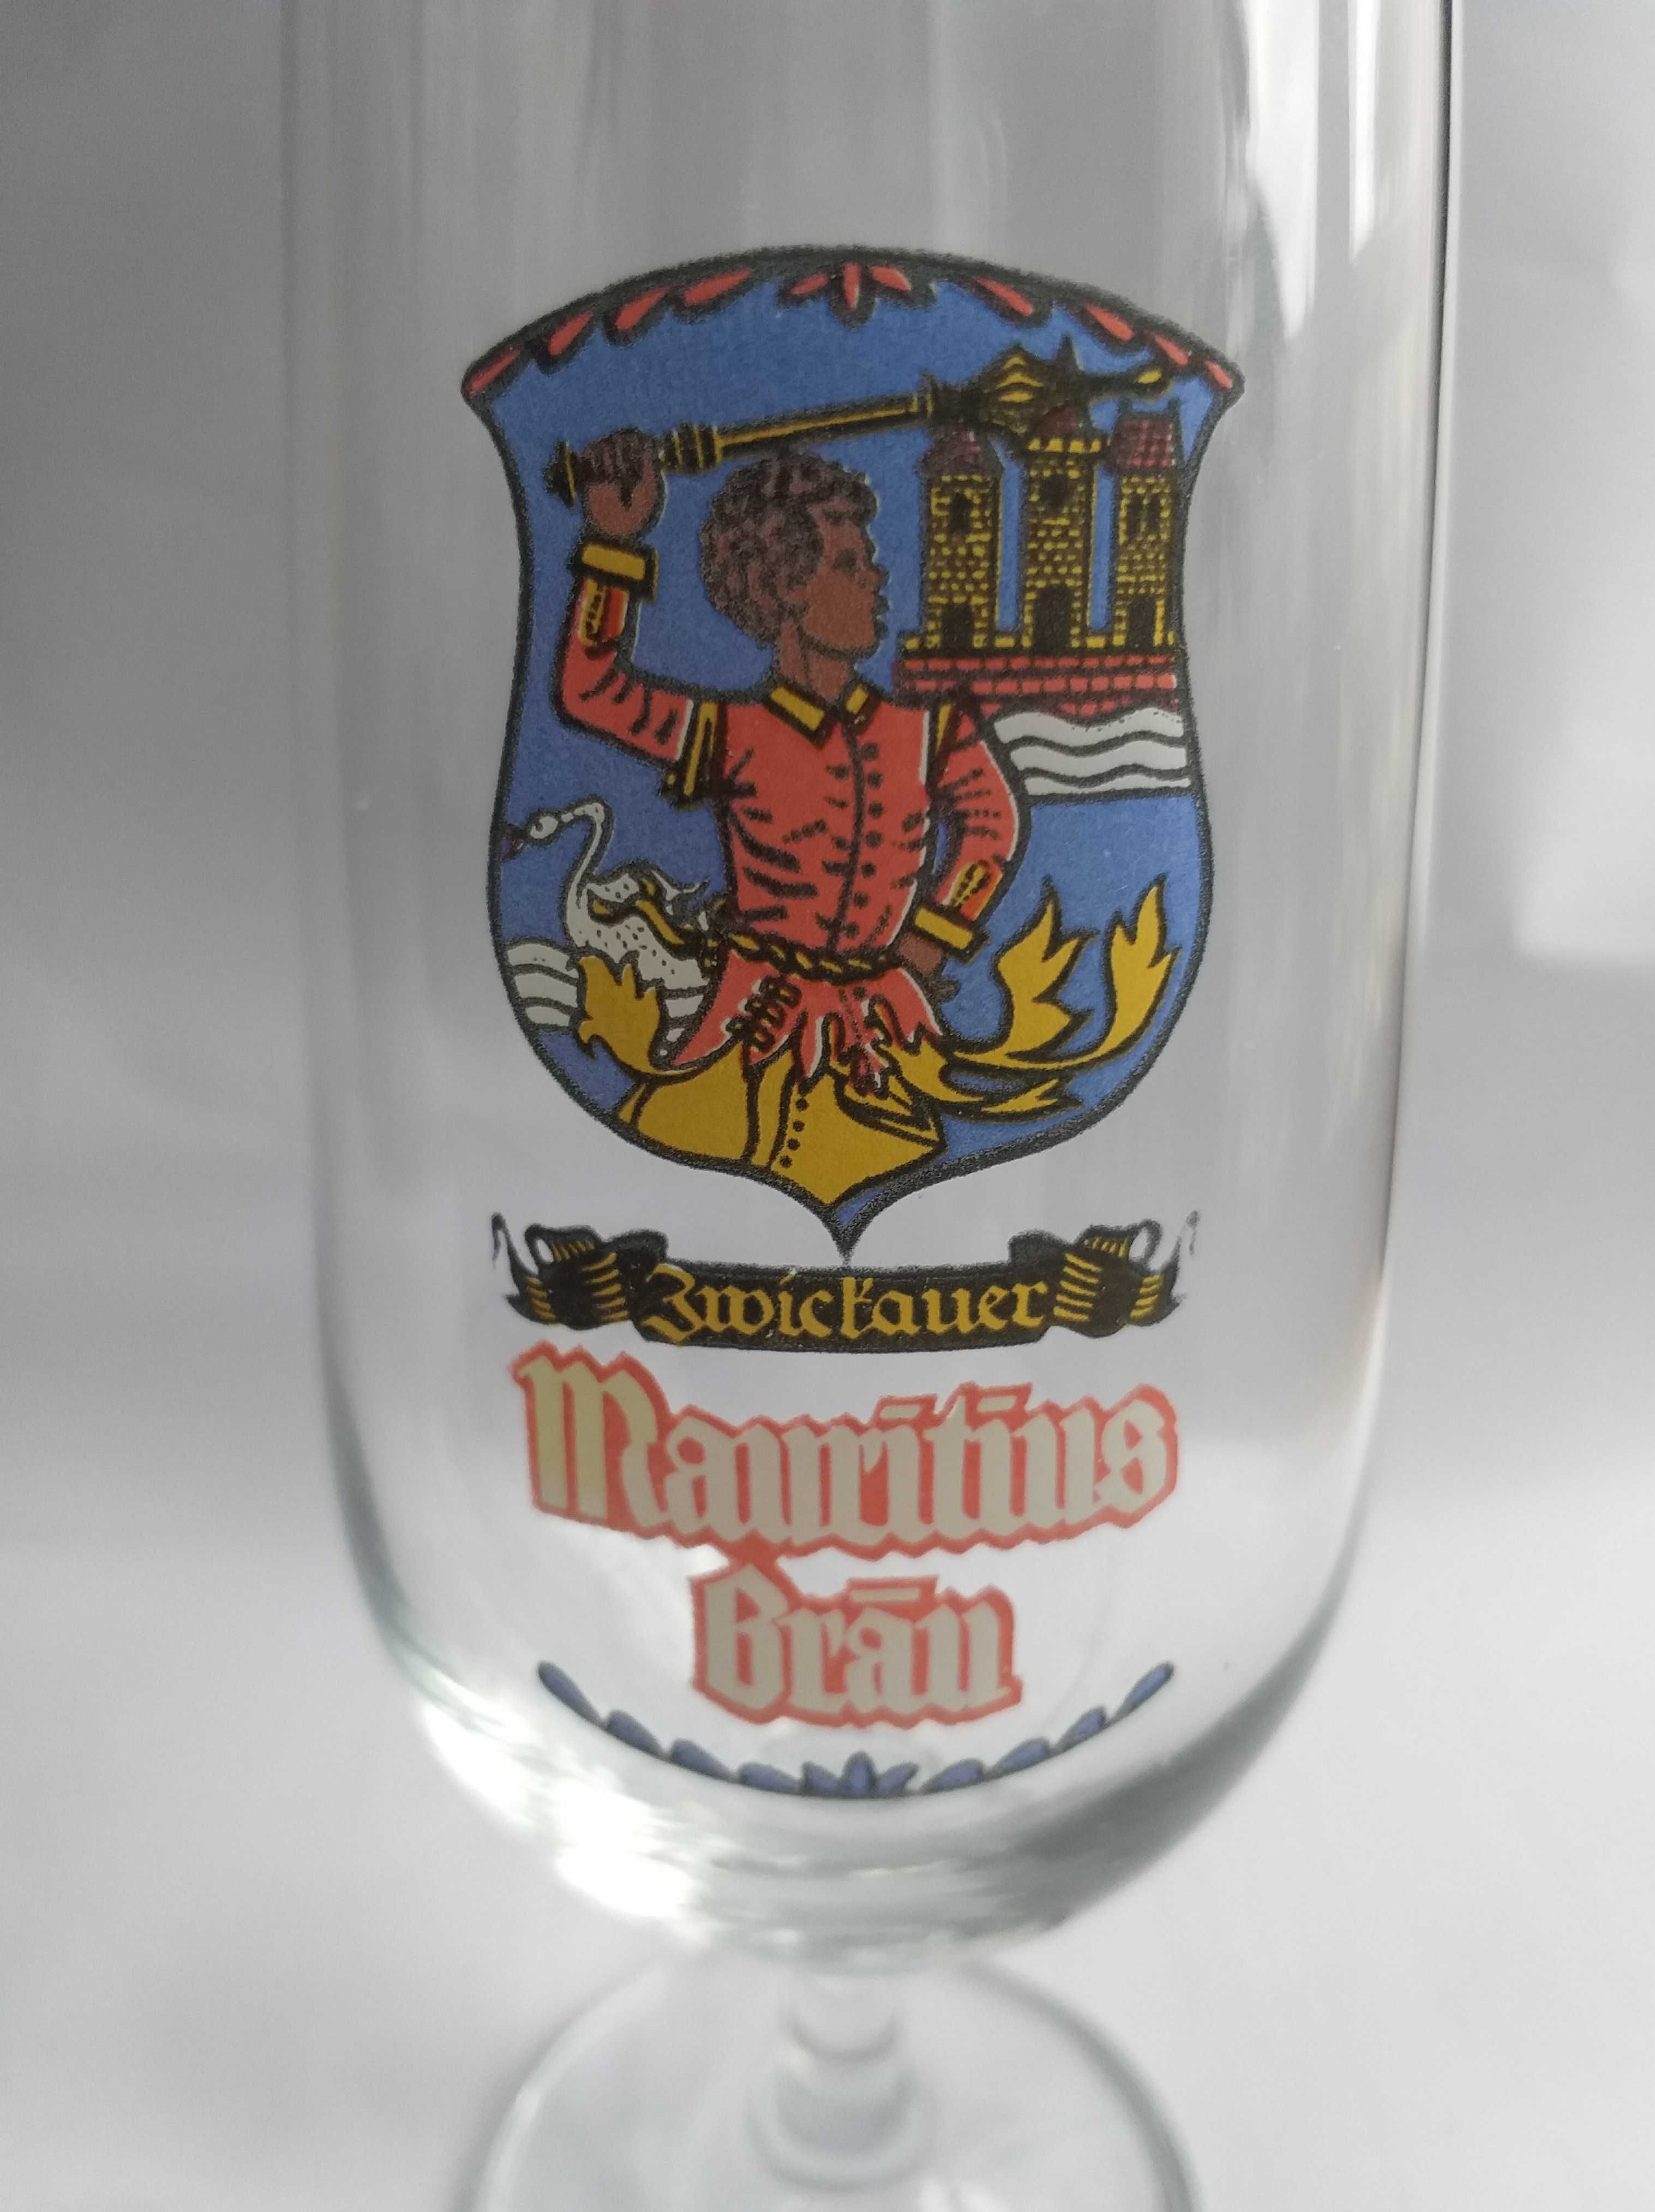 Zwickauer Mauritius brau 
немецкий (гдр) пивной 80х стакан 250мл